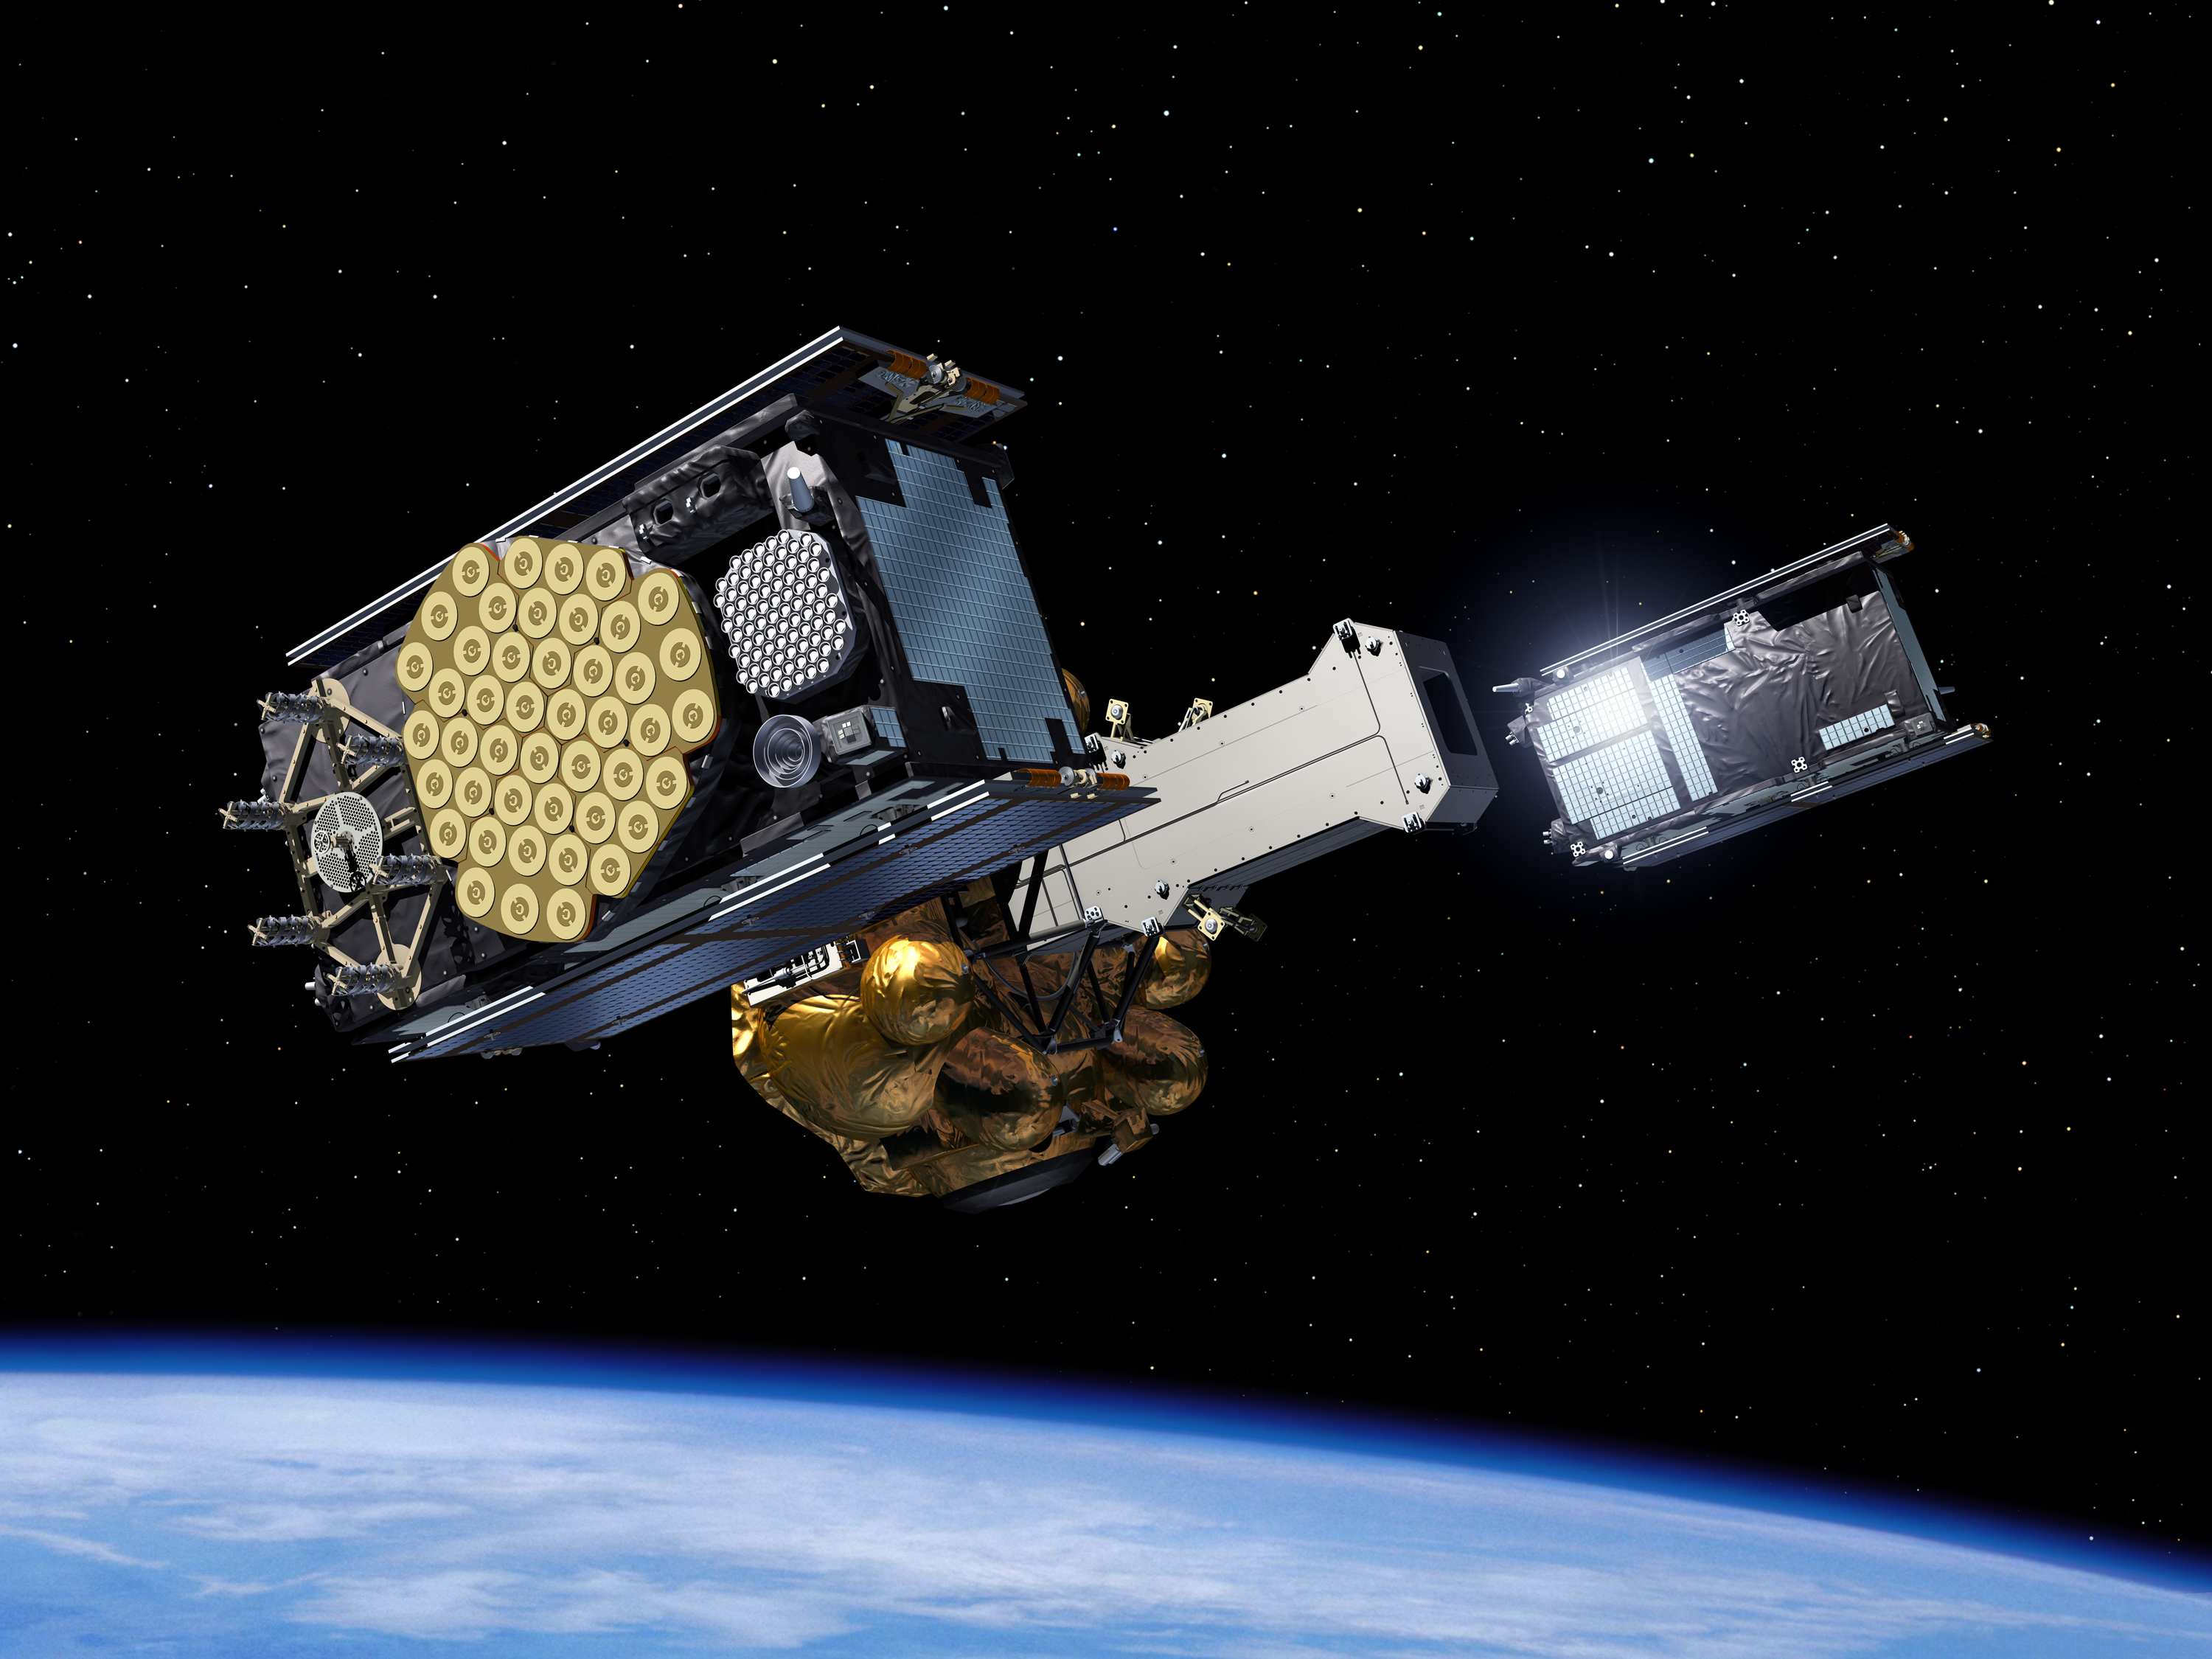 Самый большой космический аппарат. Galileo навигационная система. Навигационный Спутник Galileo. Галилео (спутниковая система навигации). Европейская навигационная система Галилео.